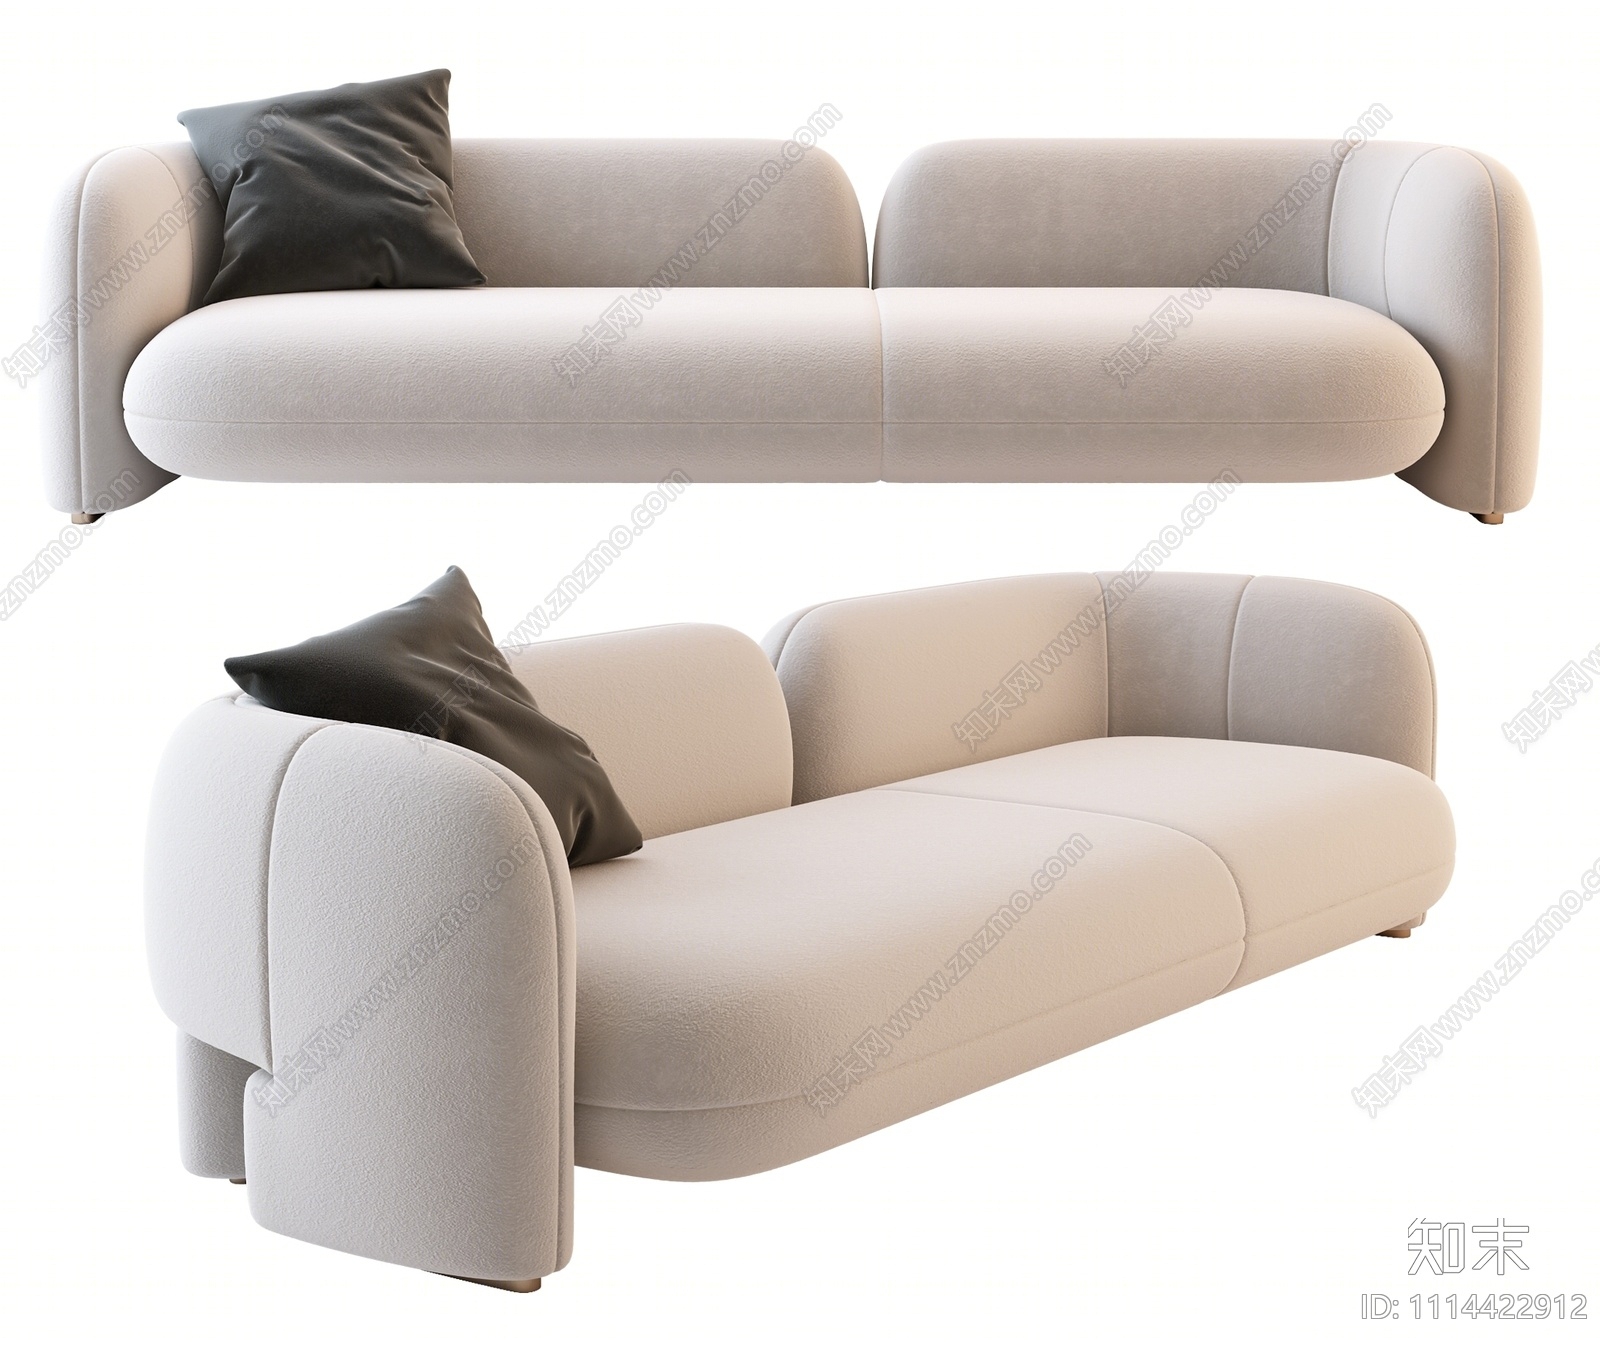 HESSENTIA现代三人沙发3D模型下载【ID:1114422912】